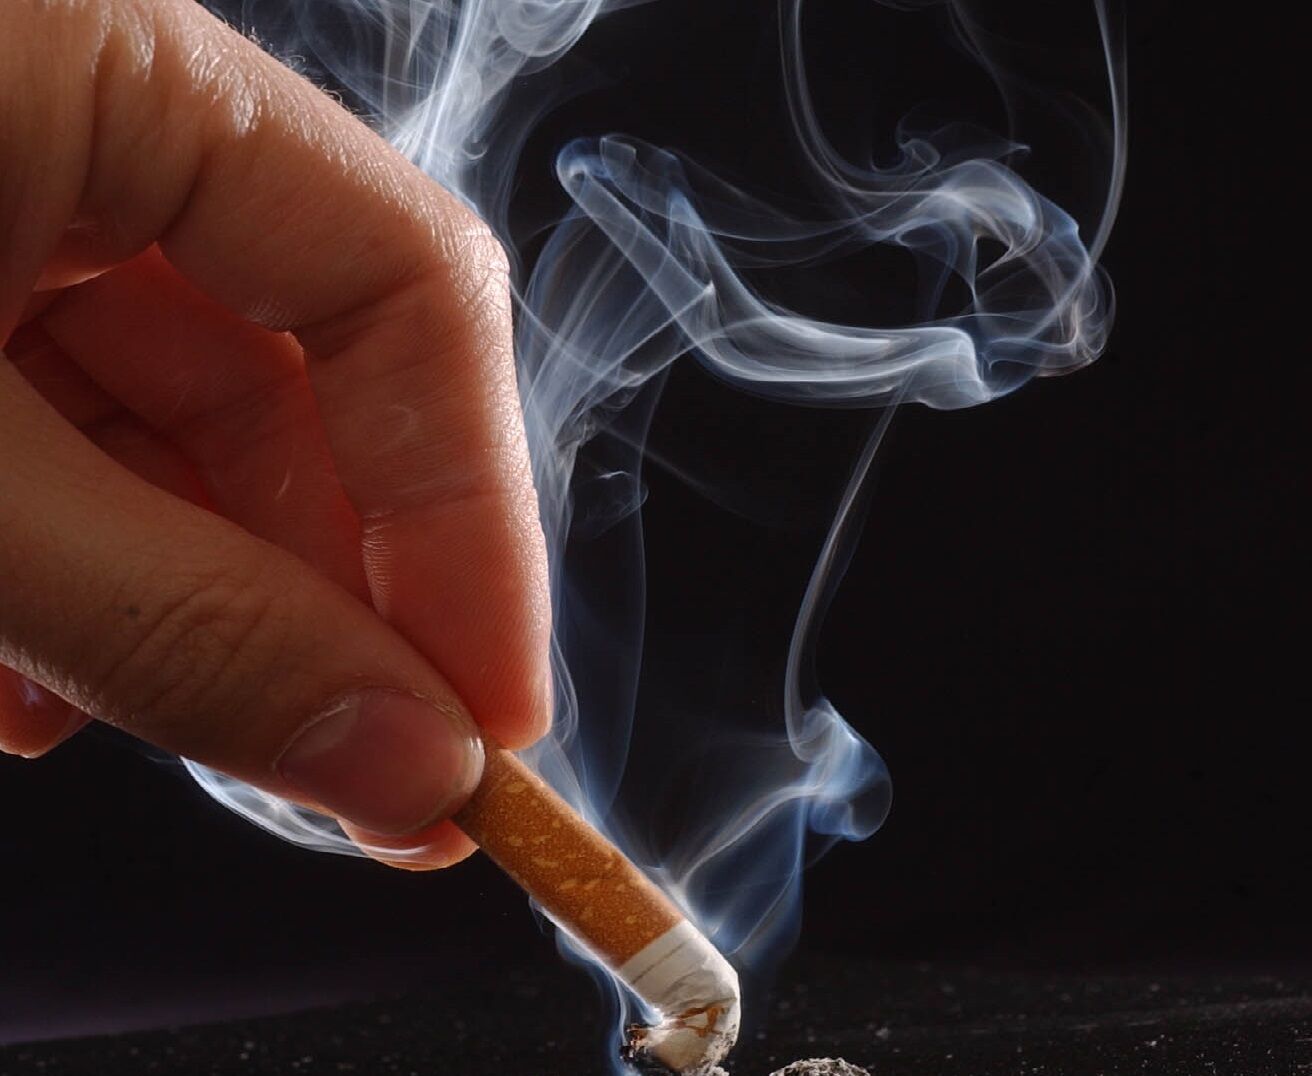 walugu-lana-finally-quits-smoking-after-11-years-of-active-smoking